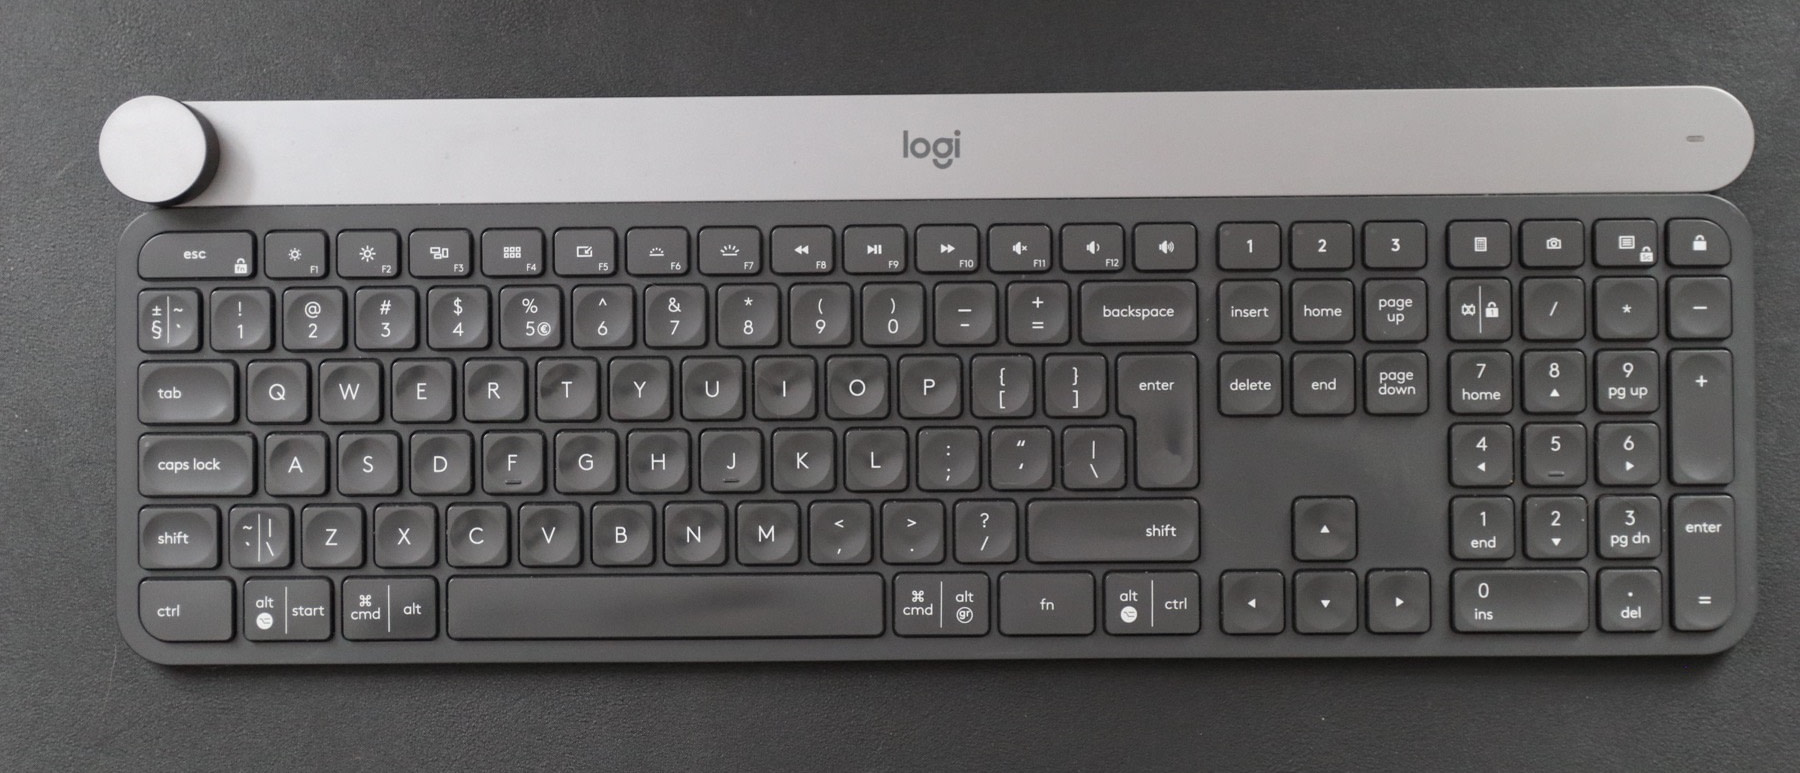 keyboard for mac mini